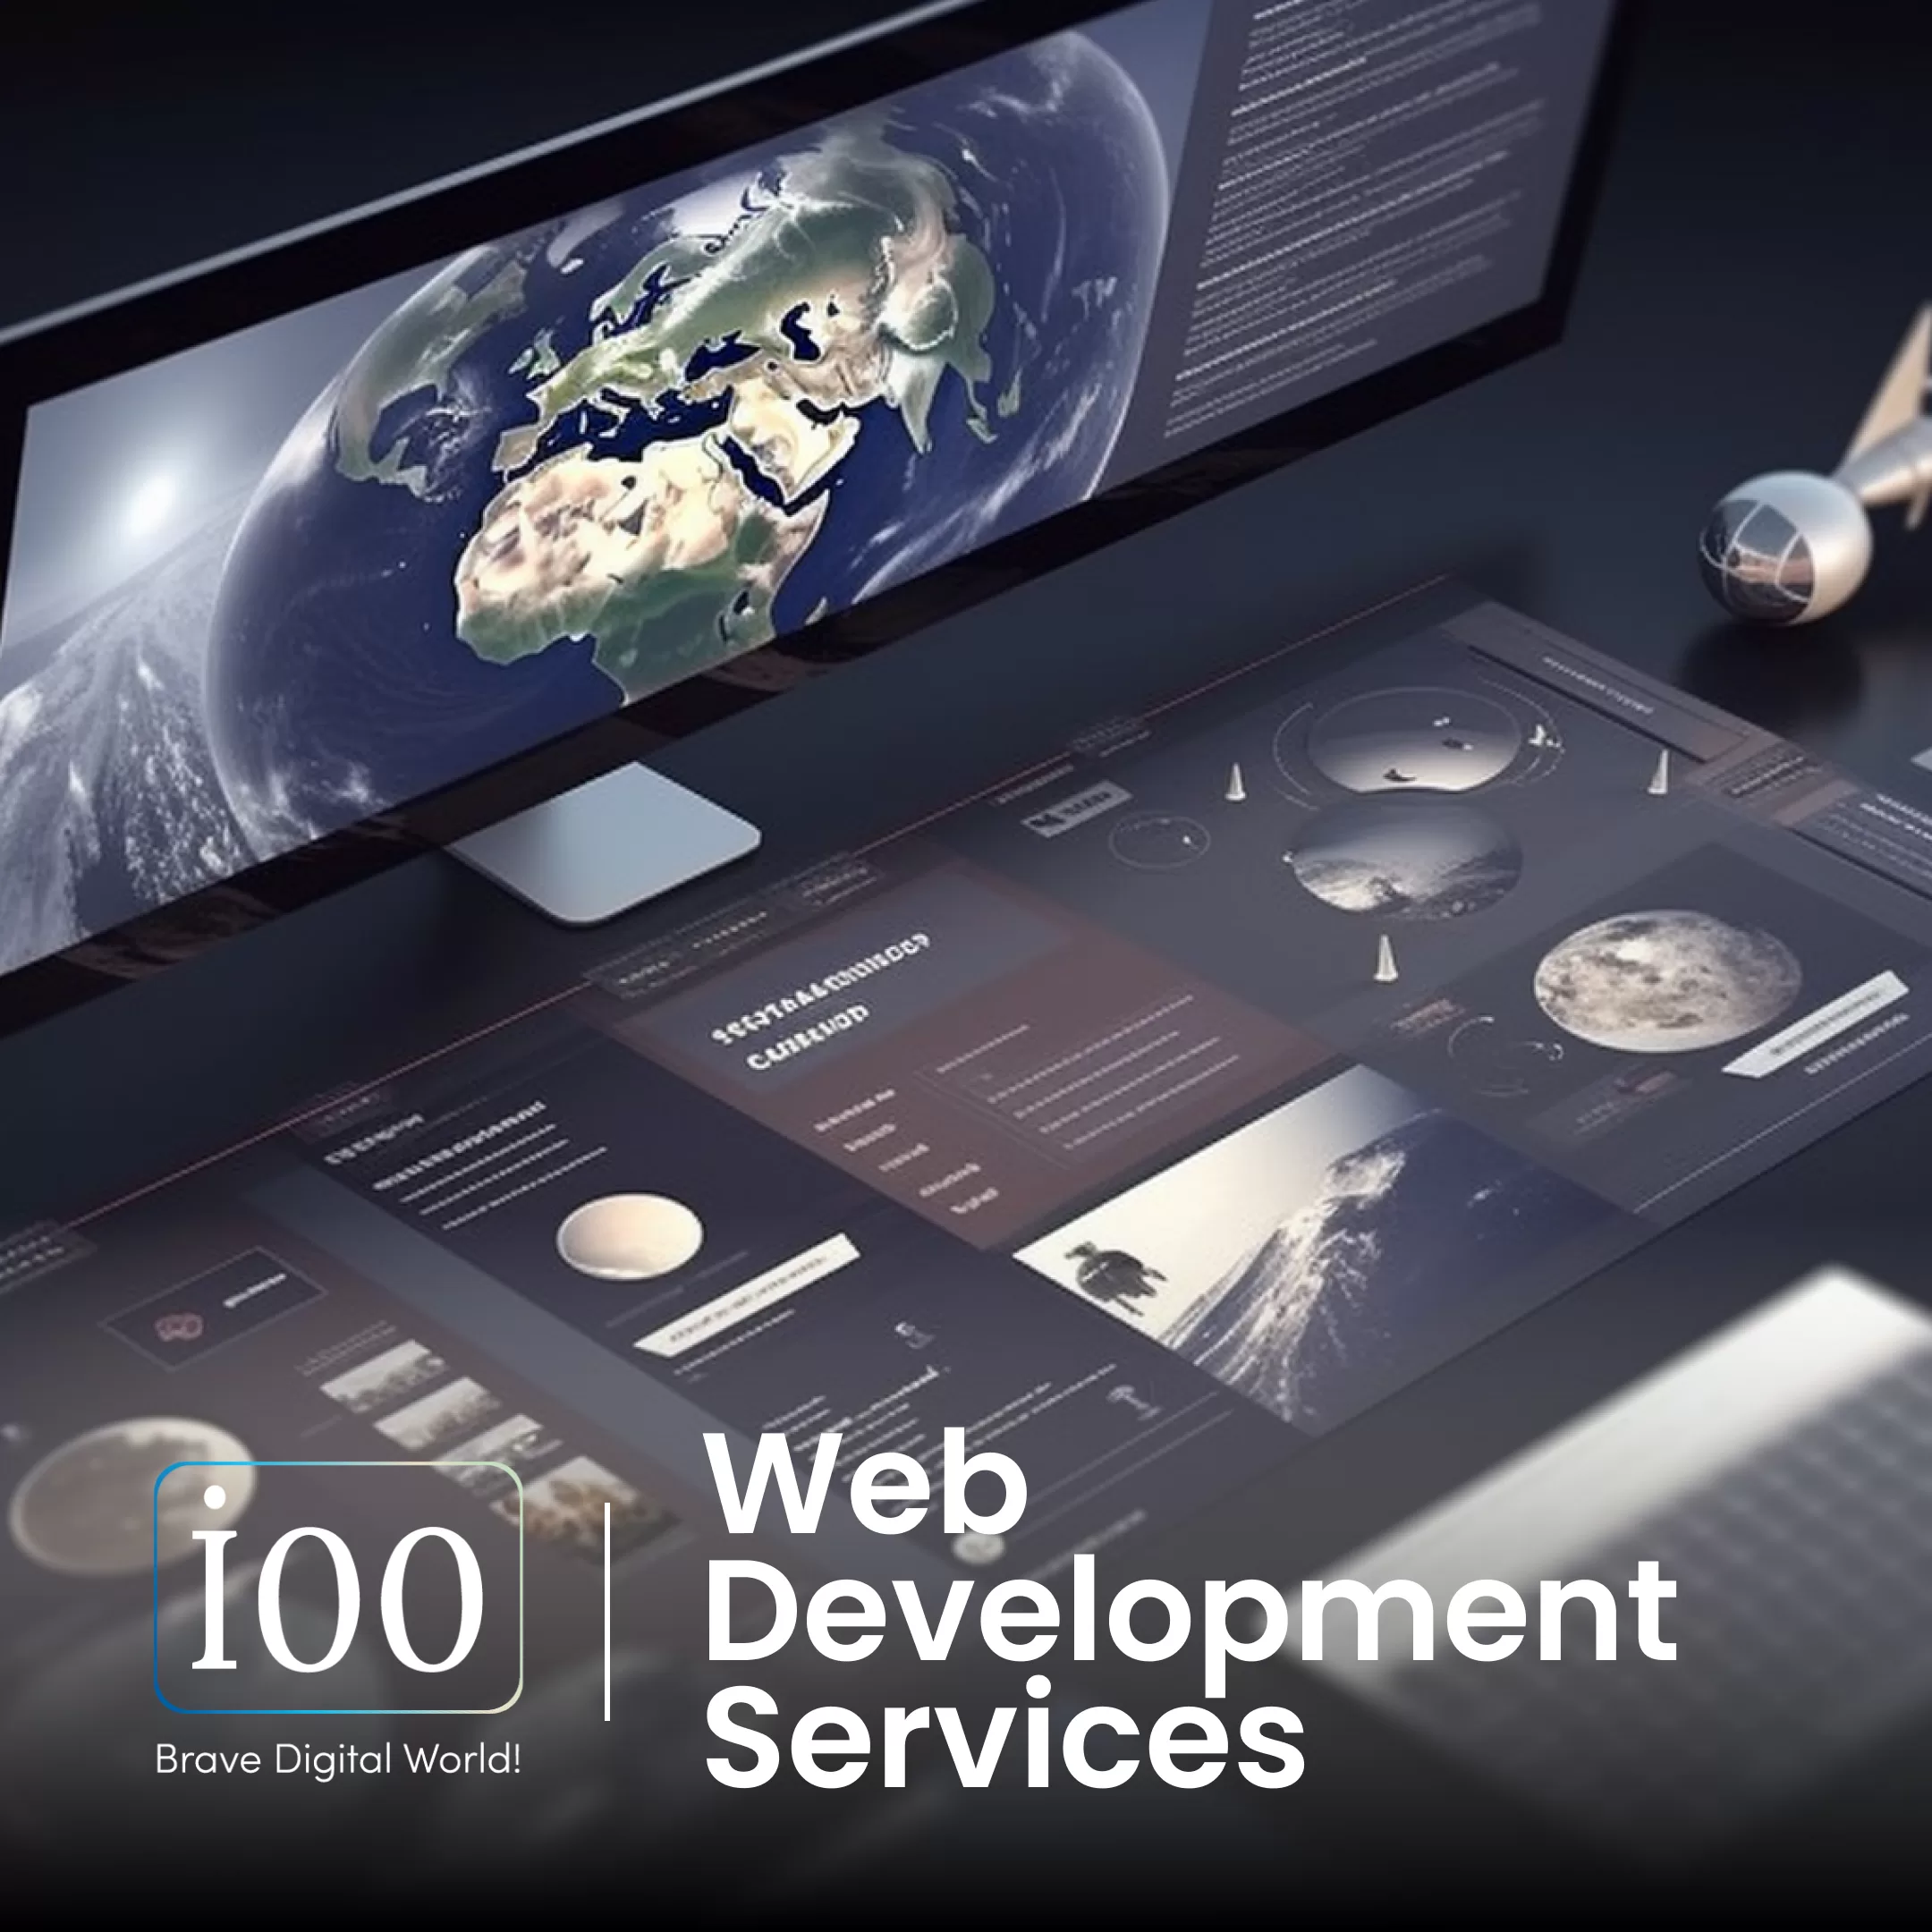 Web Development Services - i00